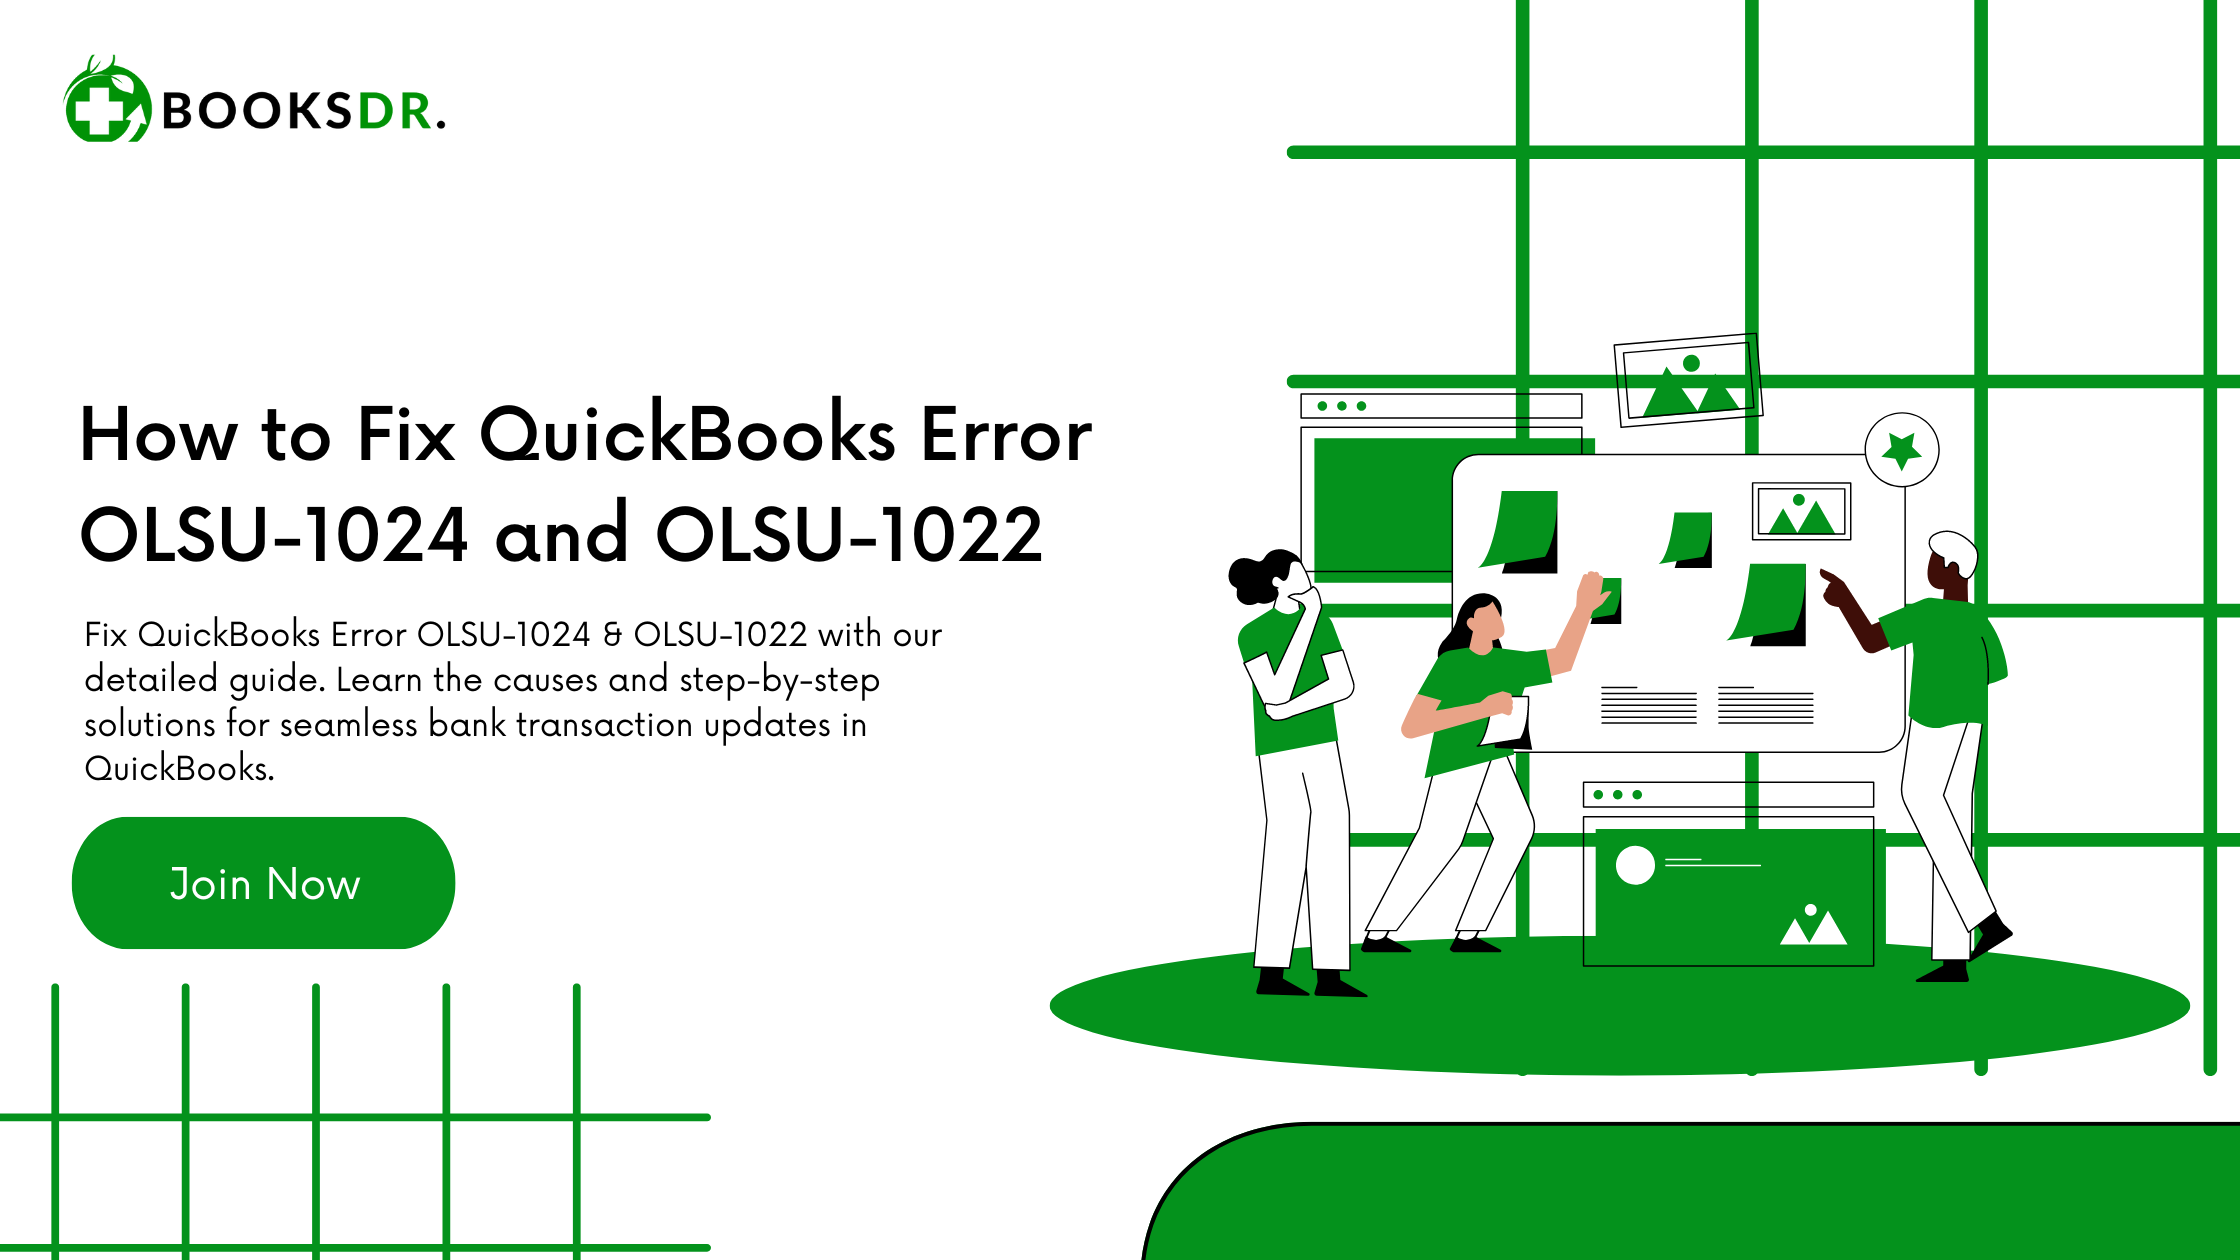 How to Fix QuickBooks Error OLSU-1024 and OLSU-1022